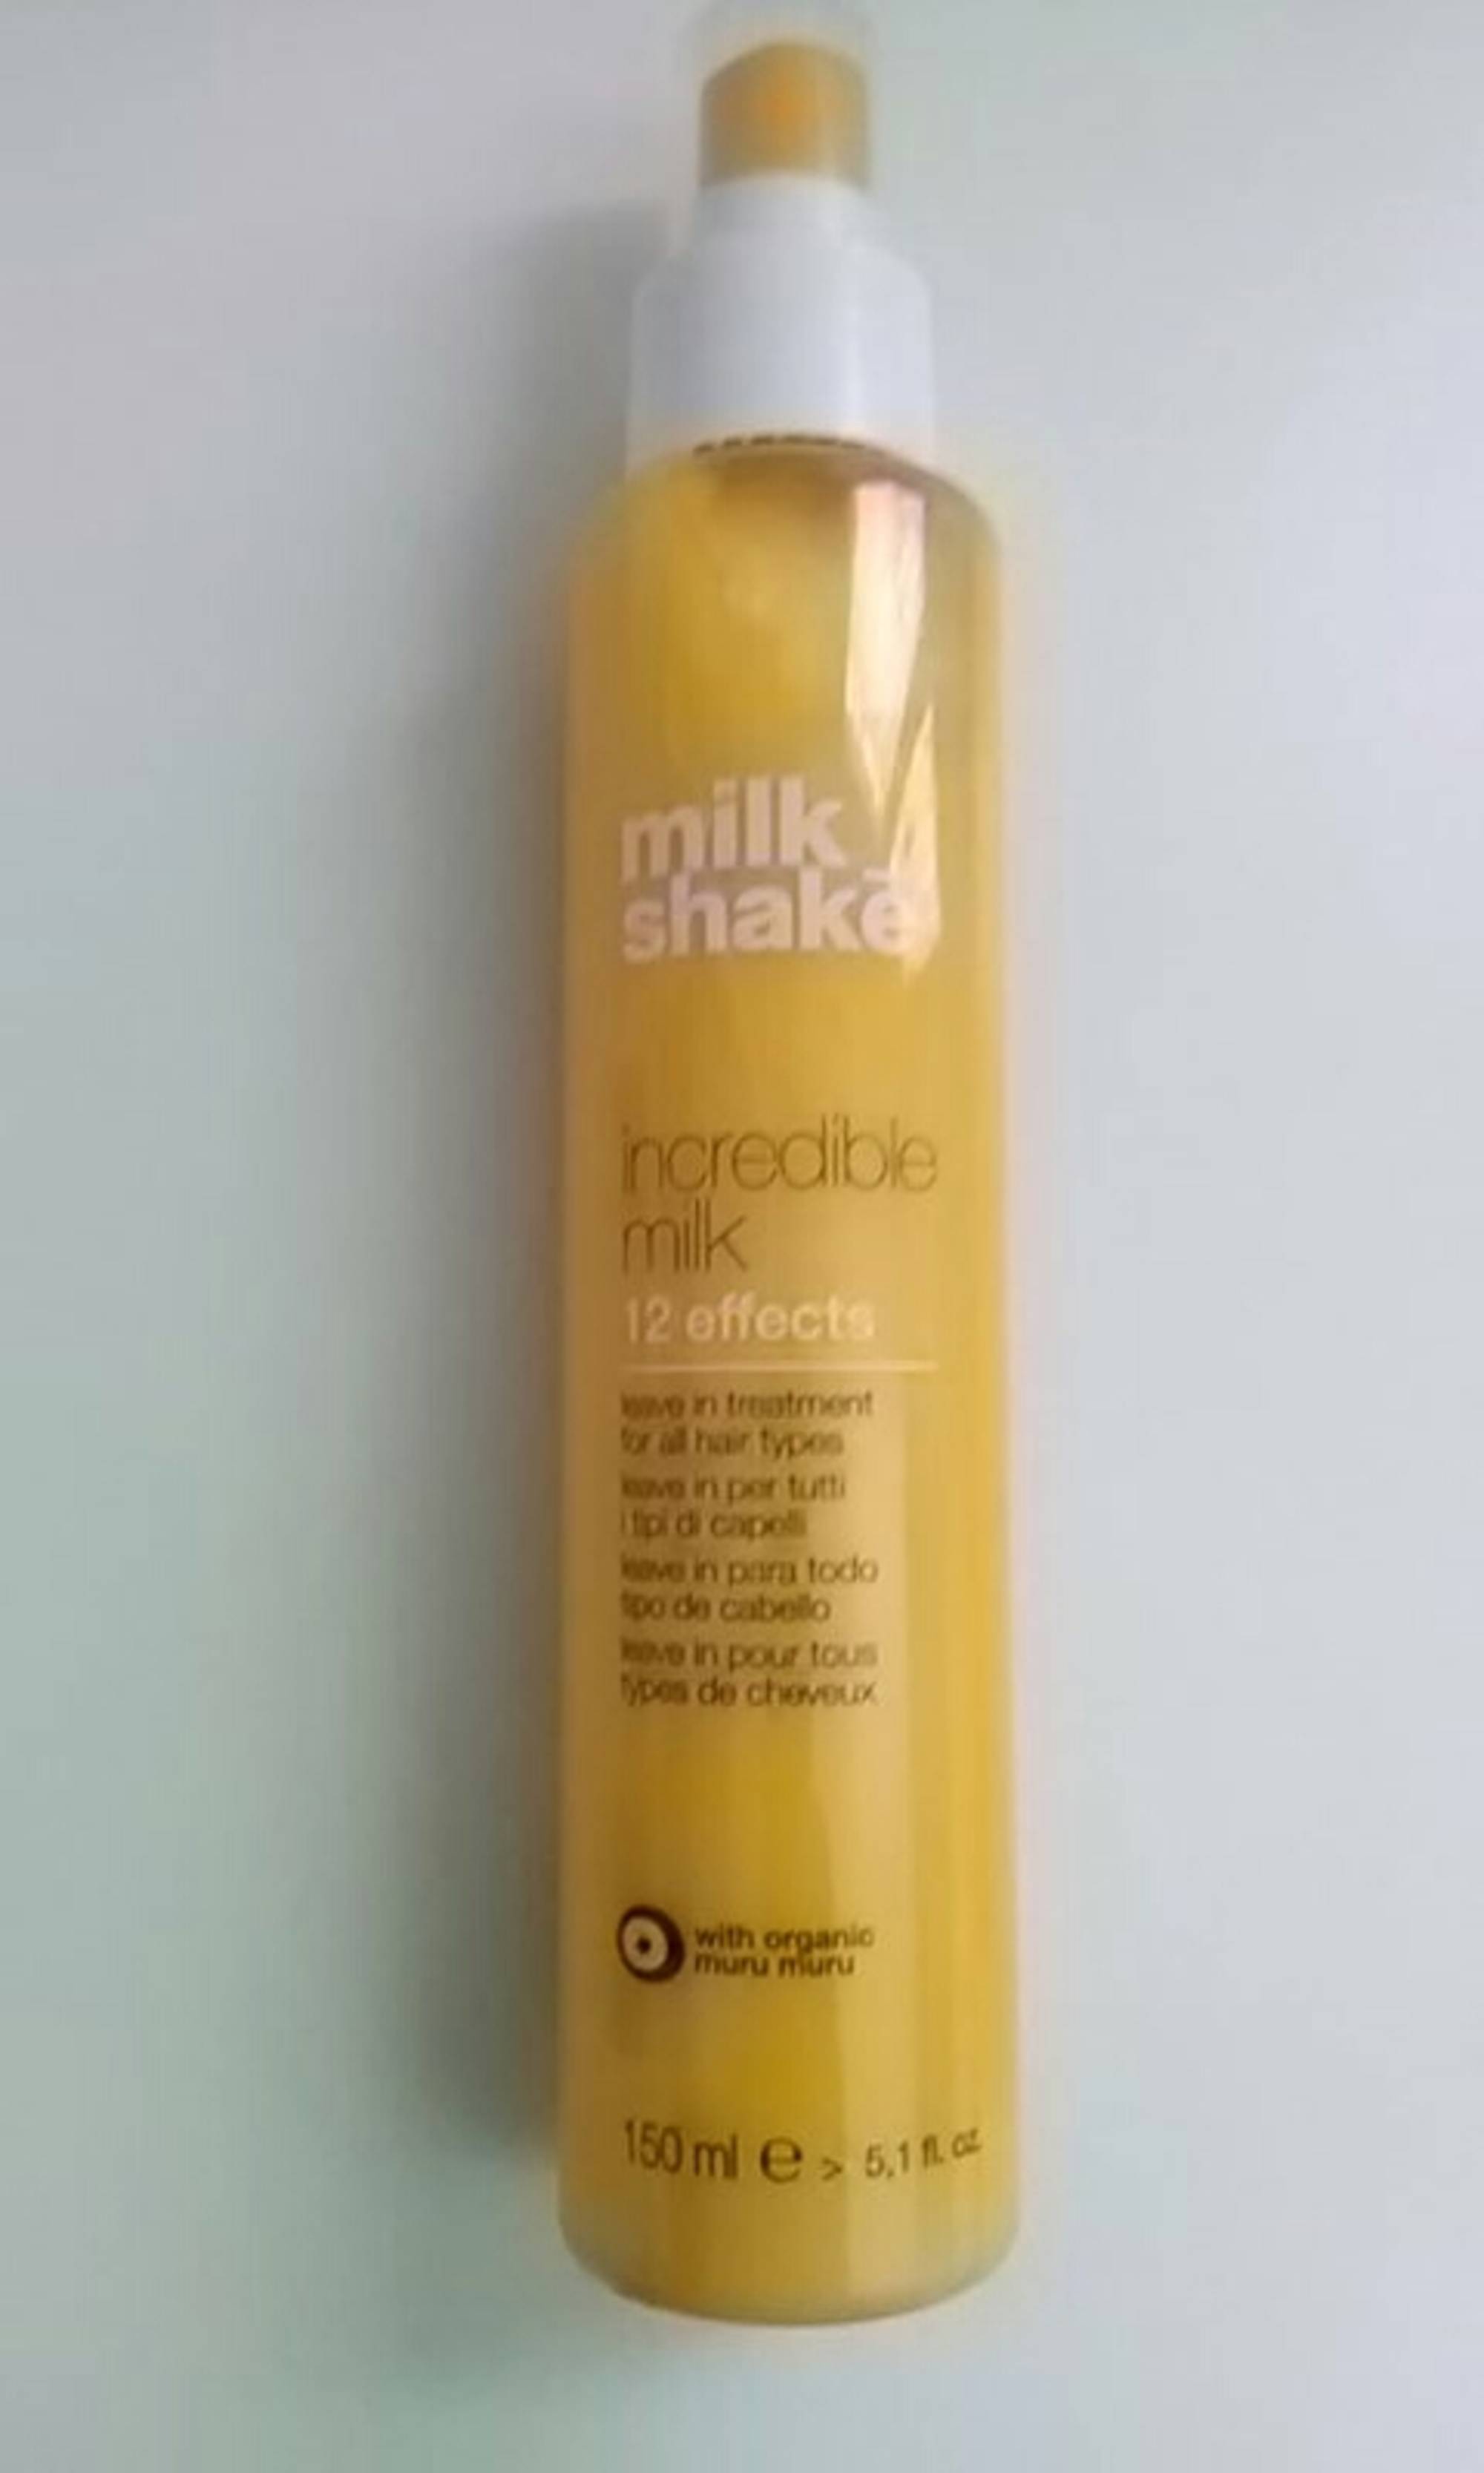 MILK SHAKE - Incredible milk 12 effects